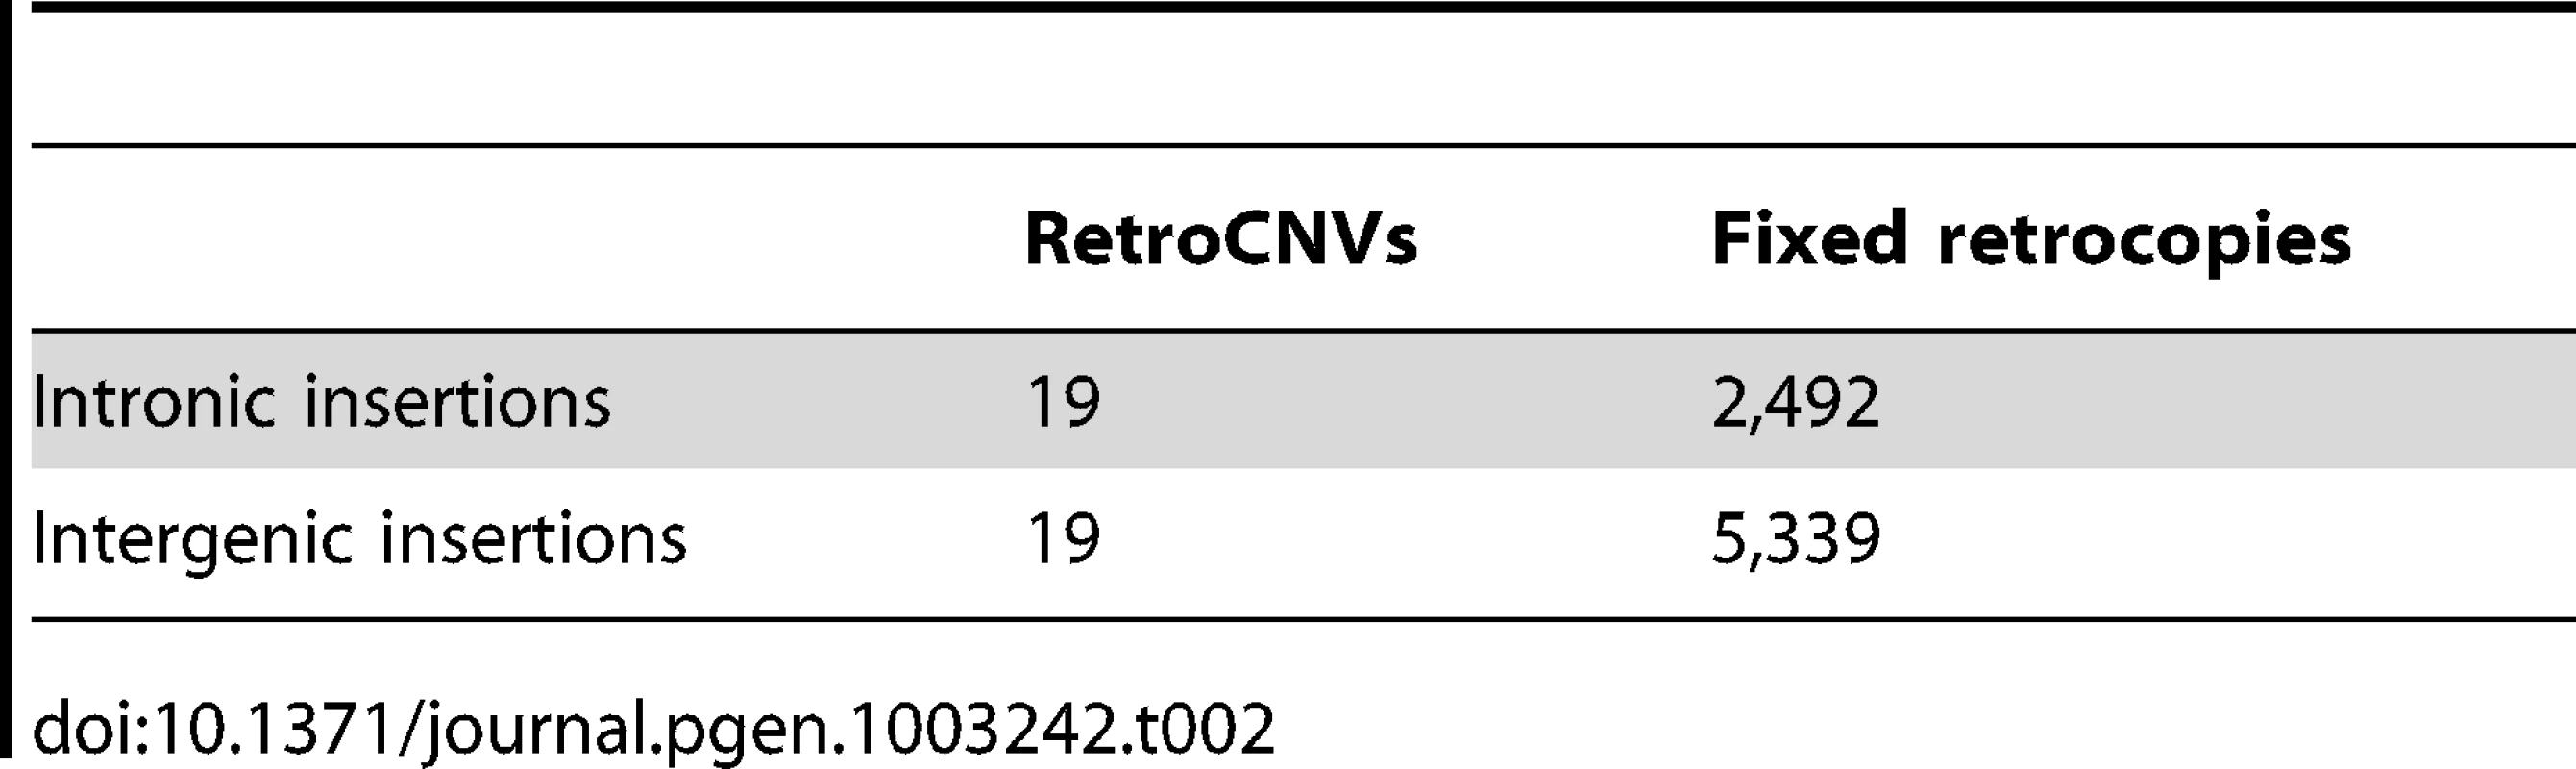 RetroCNVs versus fixed retrocopies inserted in intronic versus intergenic sequence.